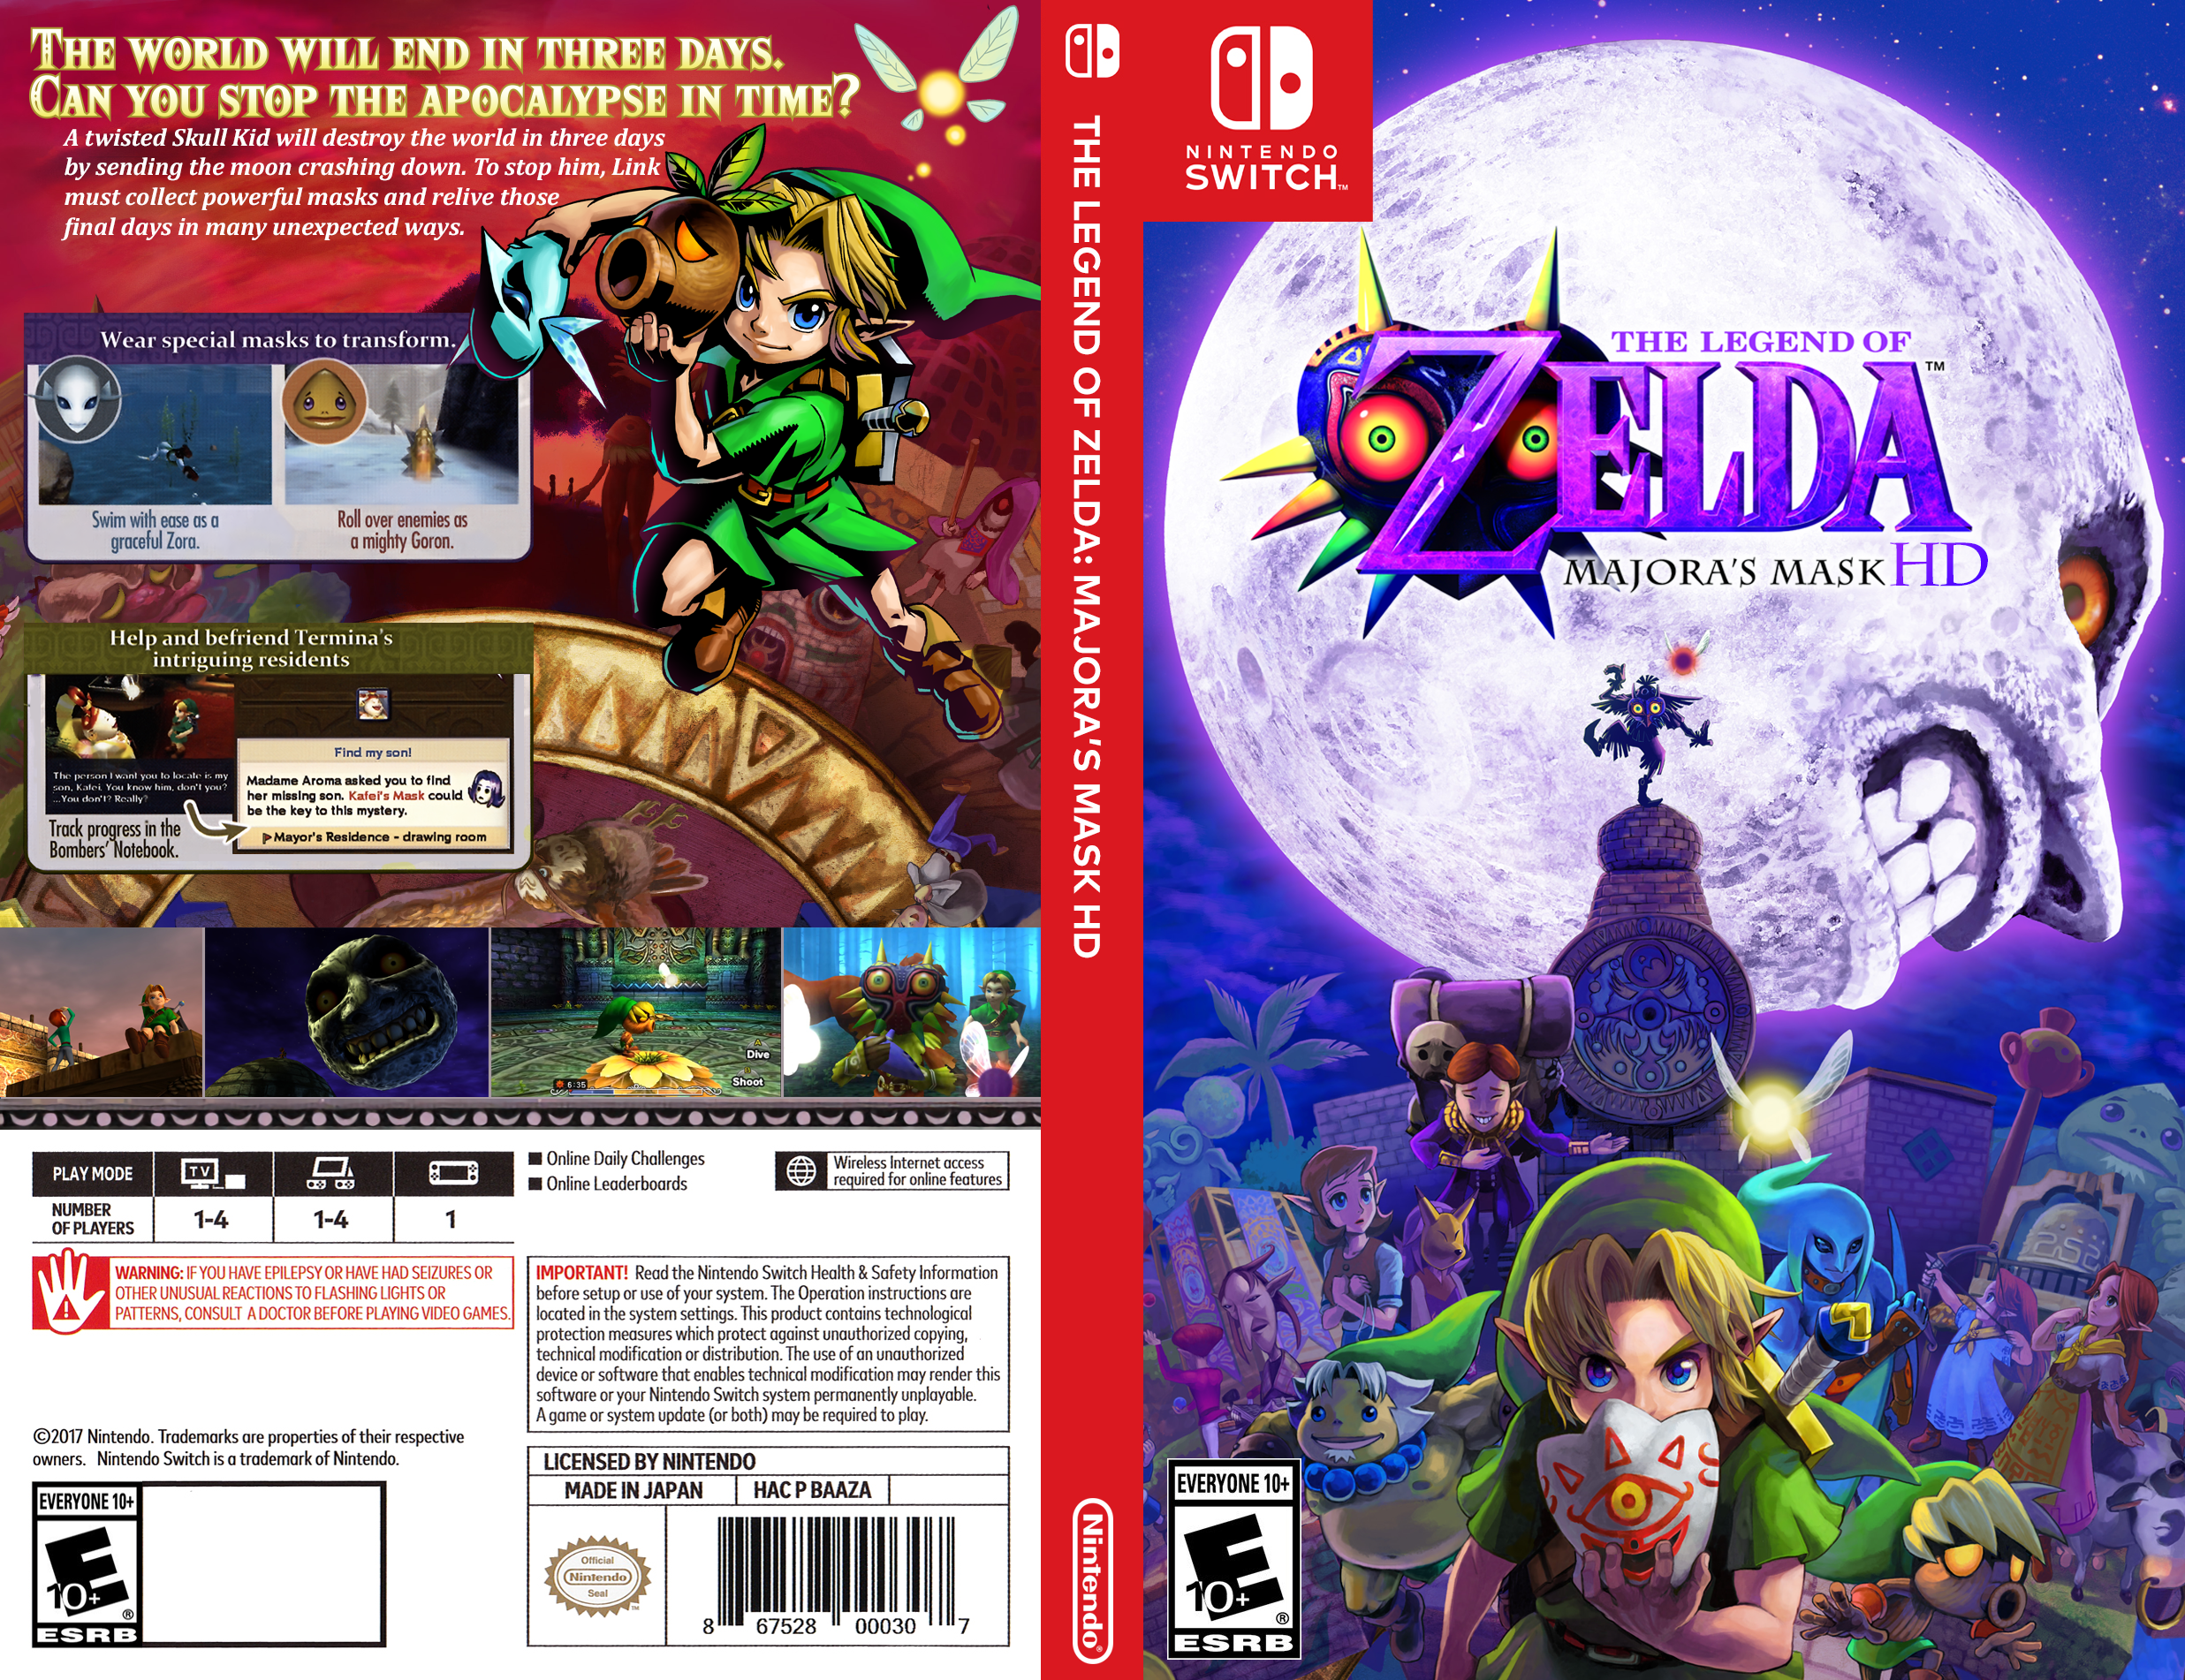 The Legend of Zelda: Majora's Mask HD box cover